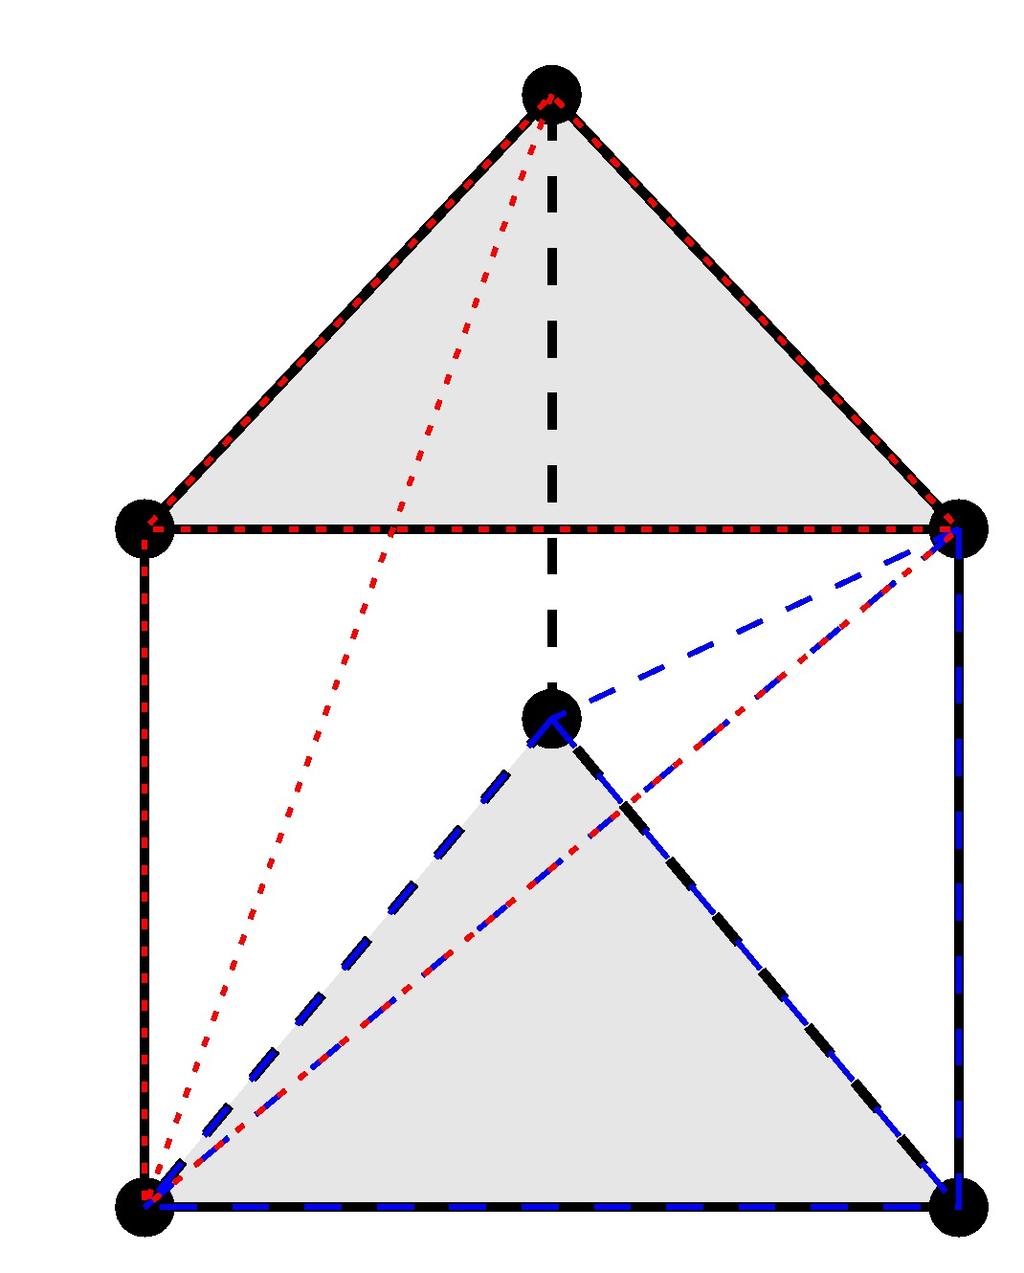 72 2 Homologie b 1 b 0 b 2 a1 a 0 a 2 Abbildung 2.7. Die Prismenkonstruktion zum Beweis des Homotopieaxioms. Wir definieren: β(σ) := n ( 1) i (F (σ id)) [a 0,..., a i, b i,..., b n ].